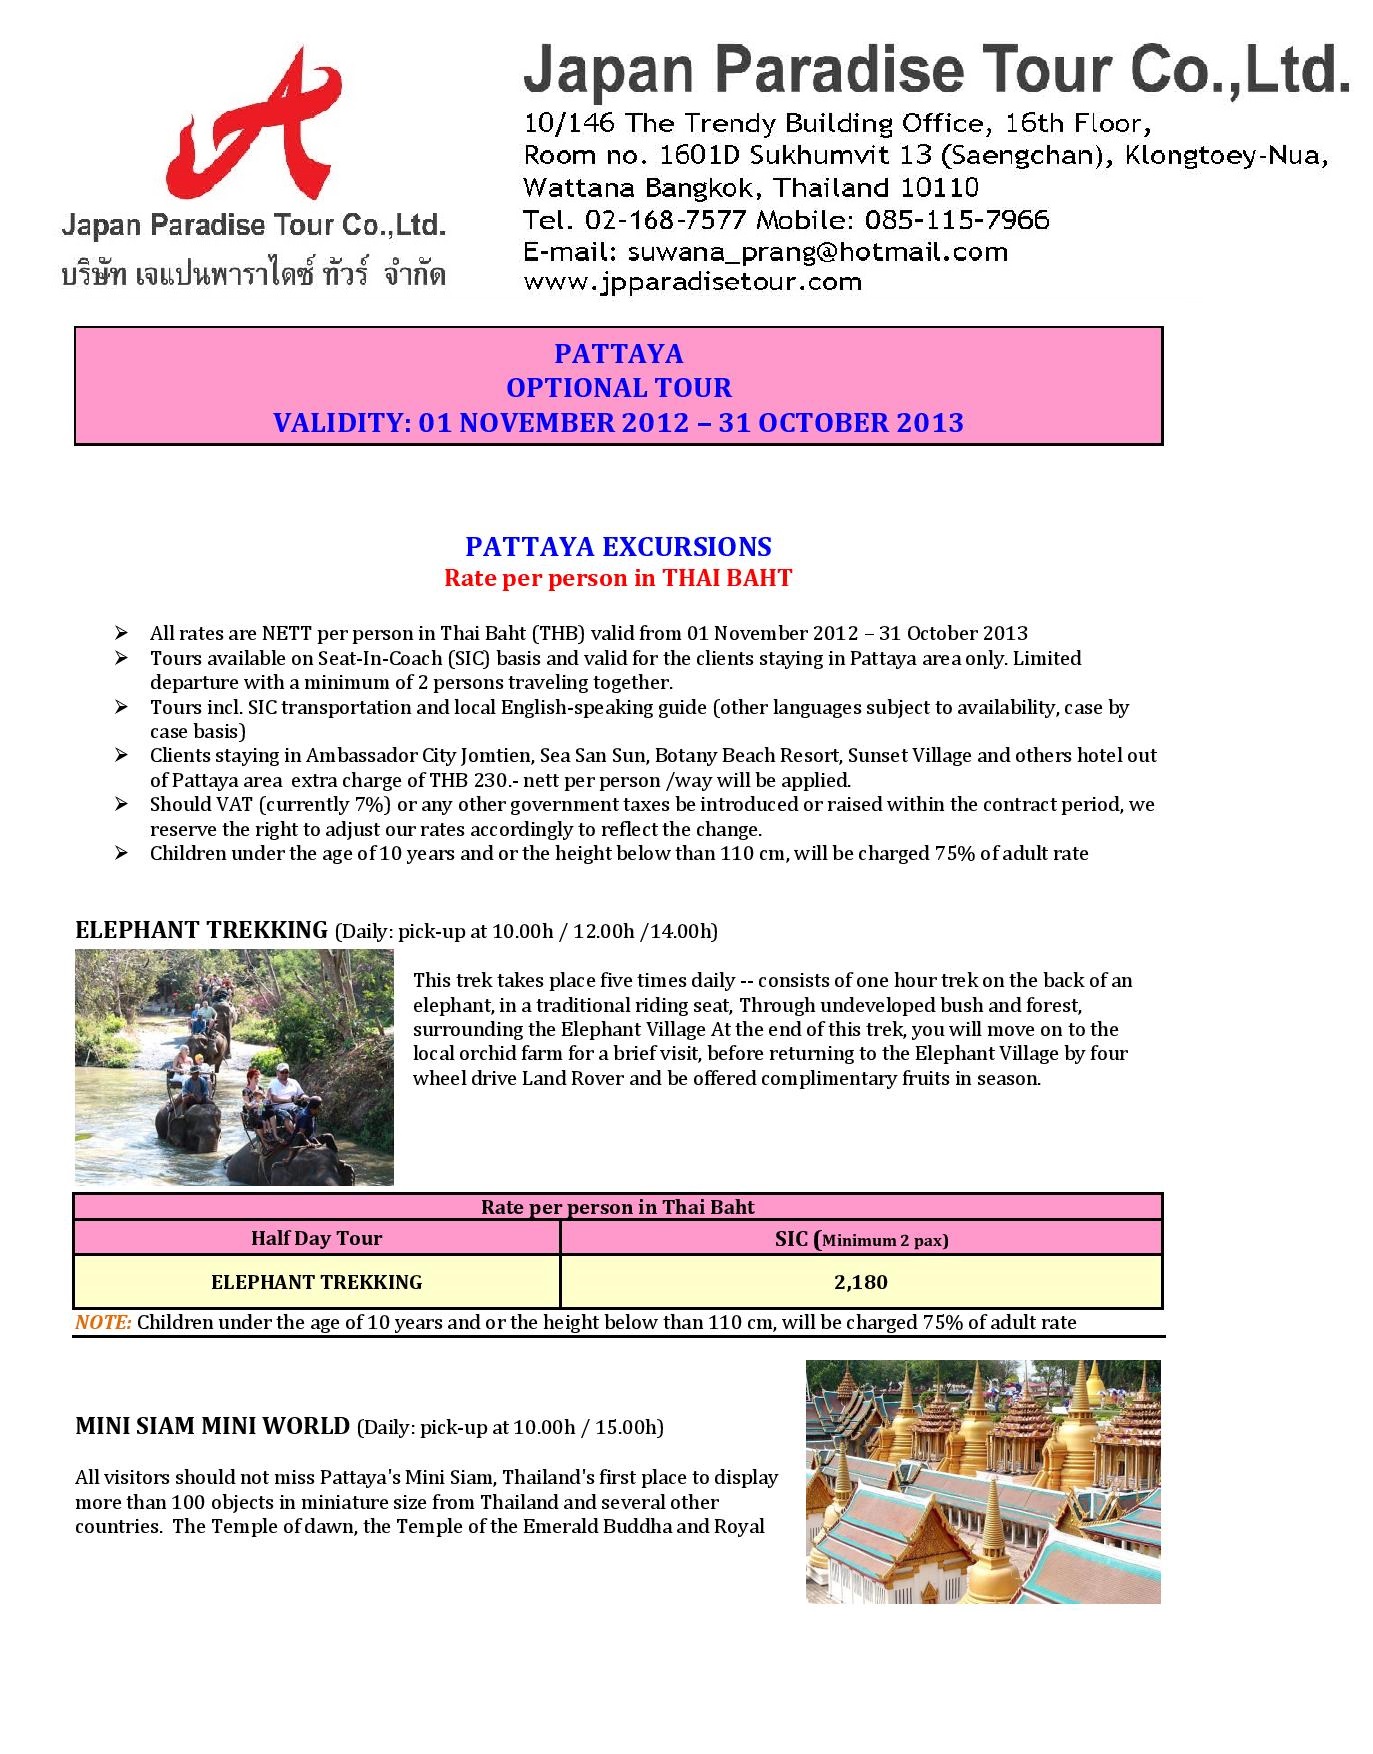 Pattaya Optional Tour Website page 001